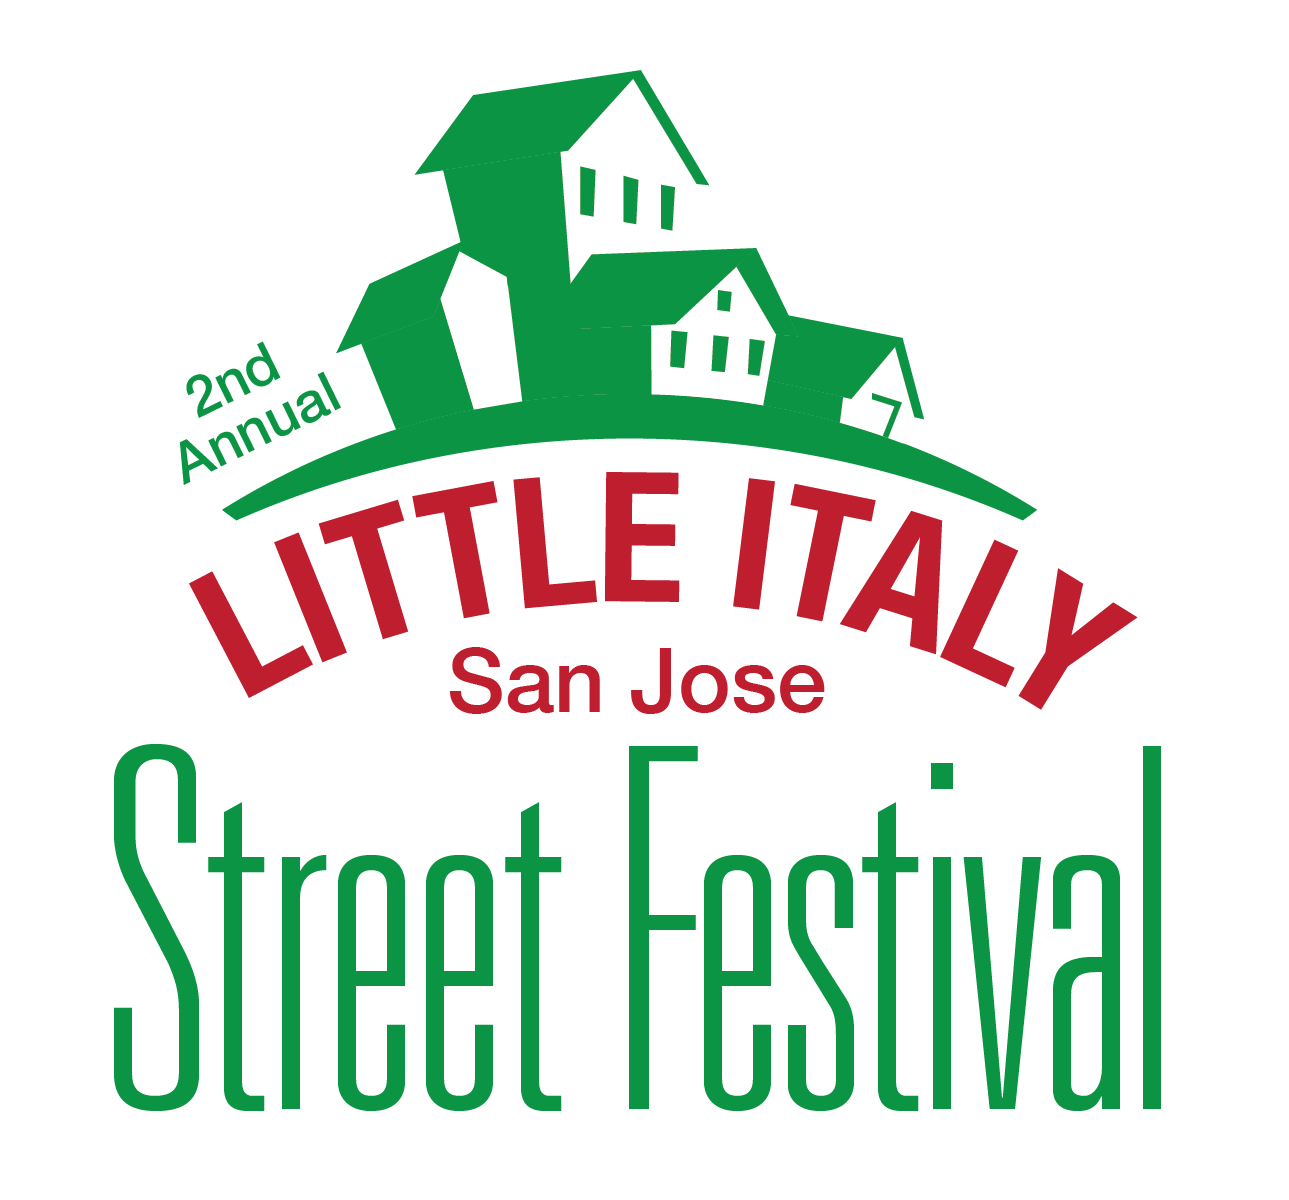 2nd Annual Little Italy San Jose Street Festival! Oct 1st